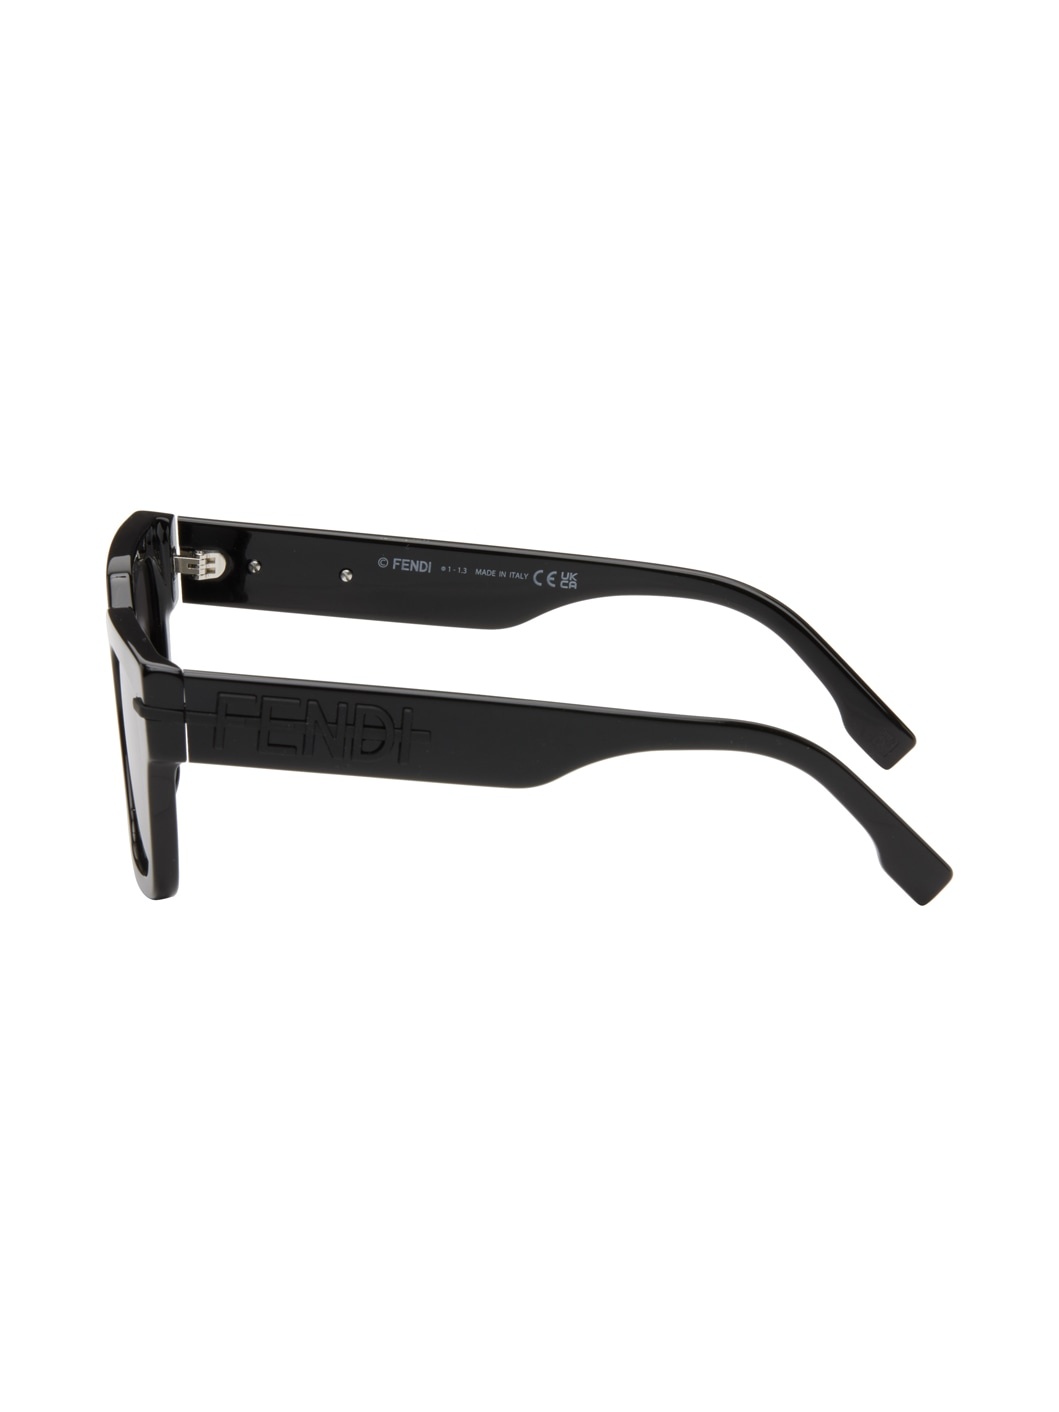 Black Fendigraphy Sunglasses - 3